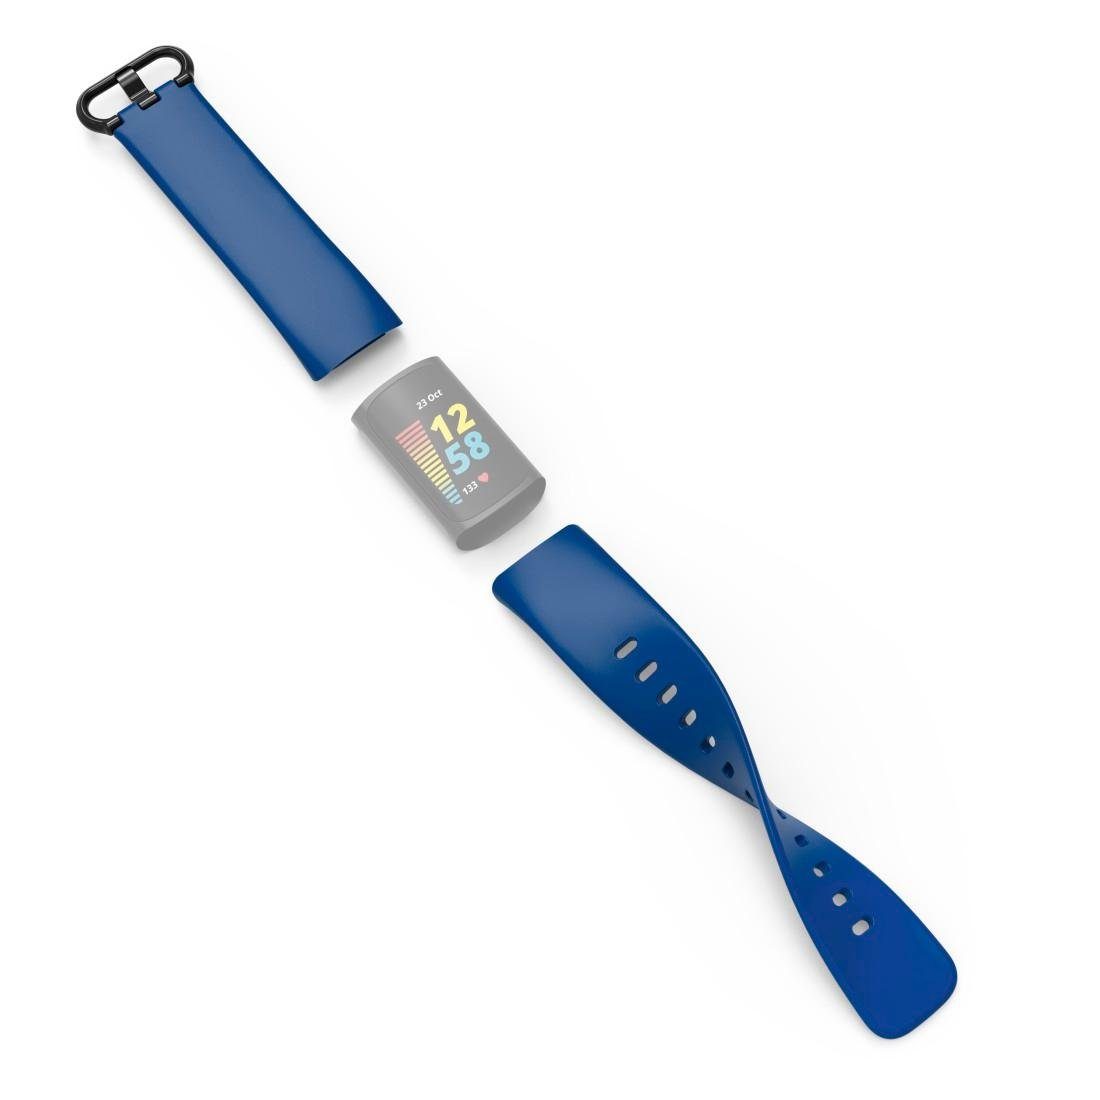 Fitbit dunkelblau für Uhrenarmband Smartwatch-Armband Tauschen, universal zum 5, Charge Armband Hama